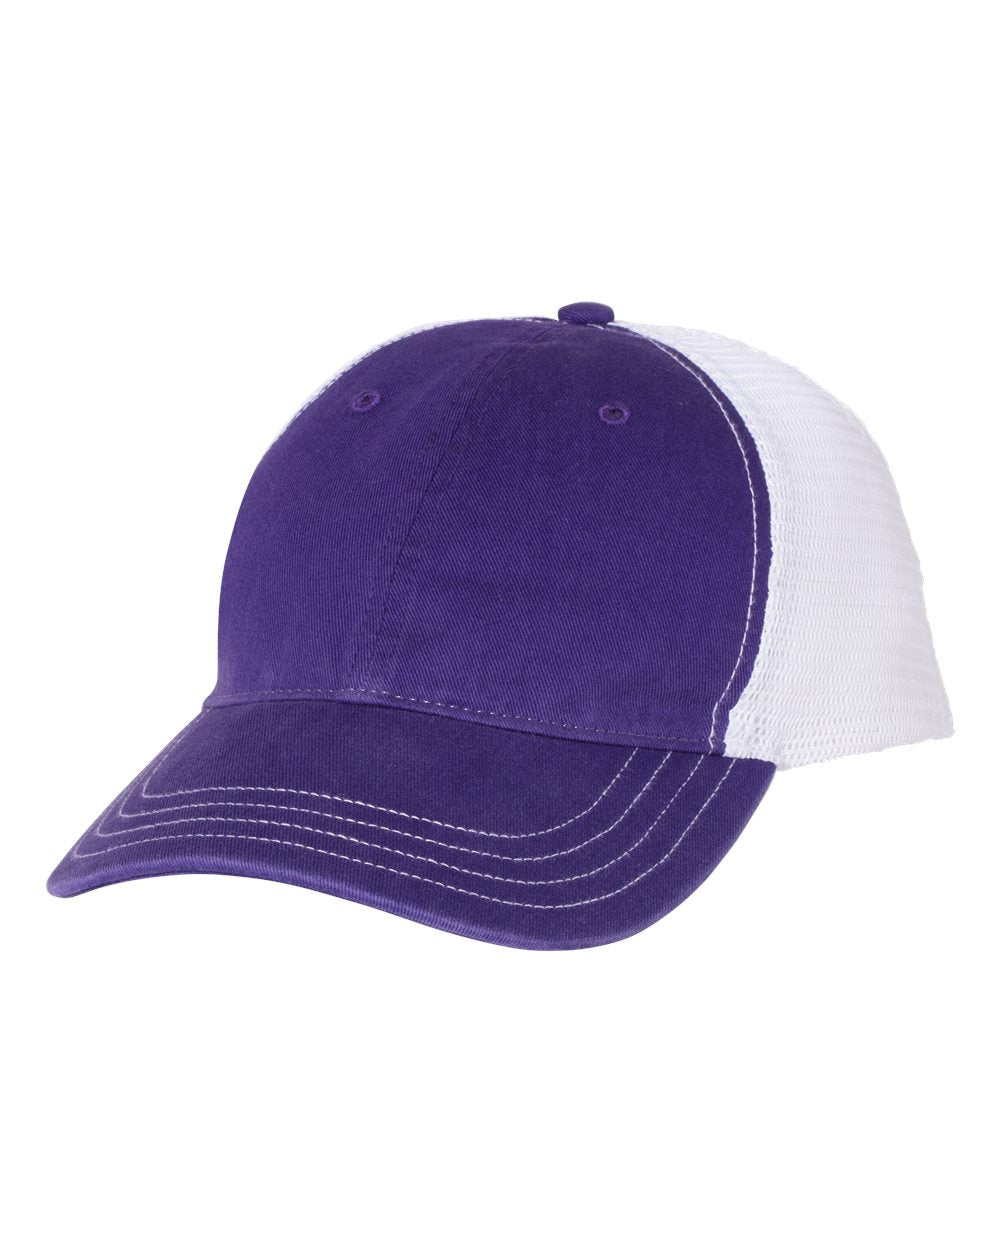 richardson cap purple white